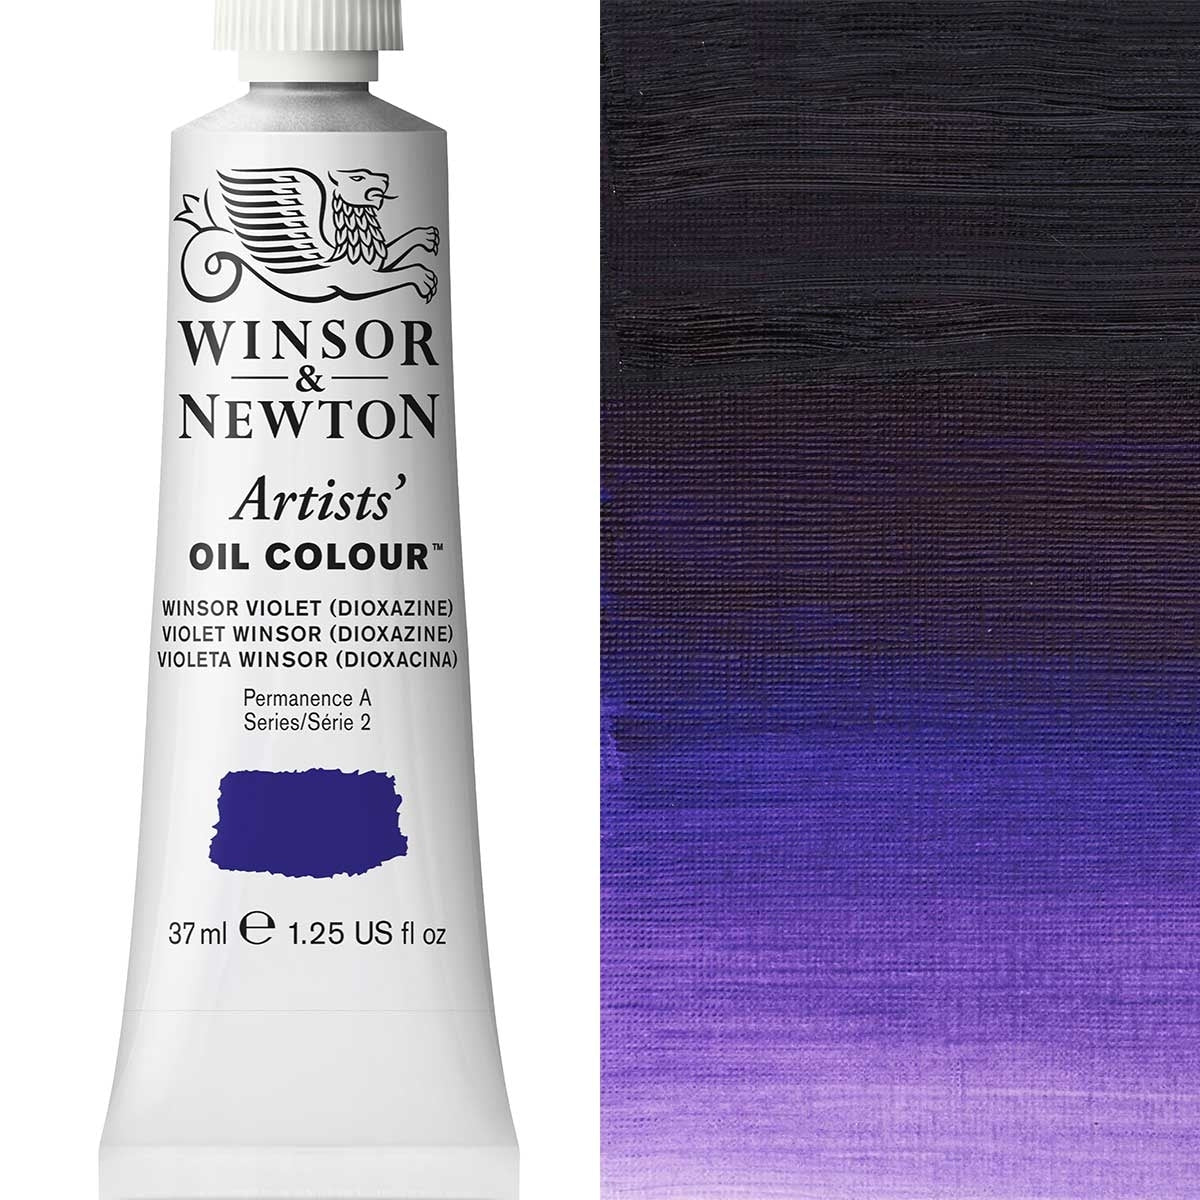 Winsor and Newton - Artists' Oil Colour - 37ml - Winsor Violet Dioxazine